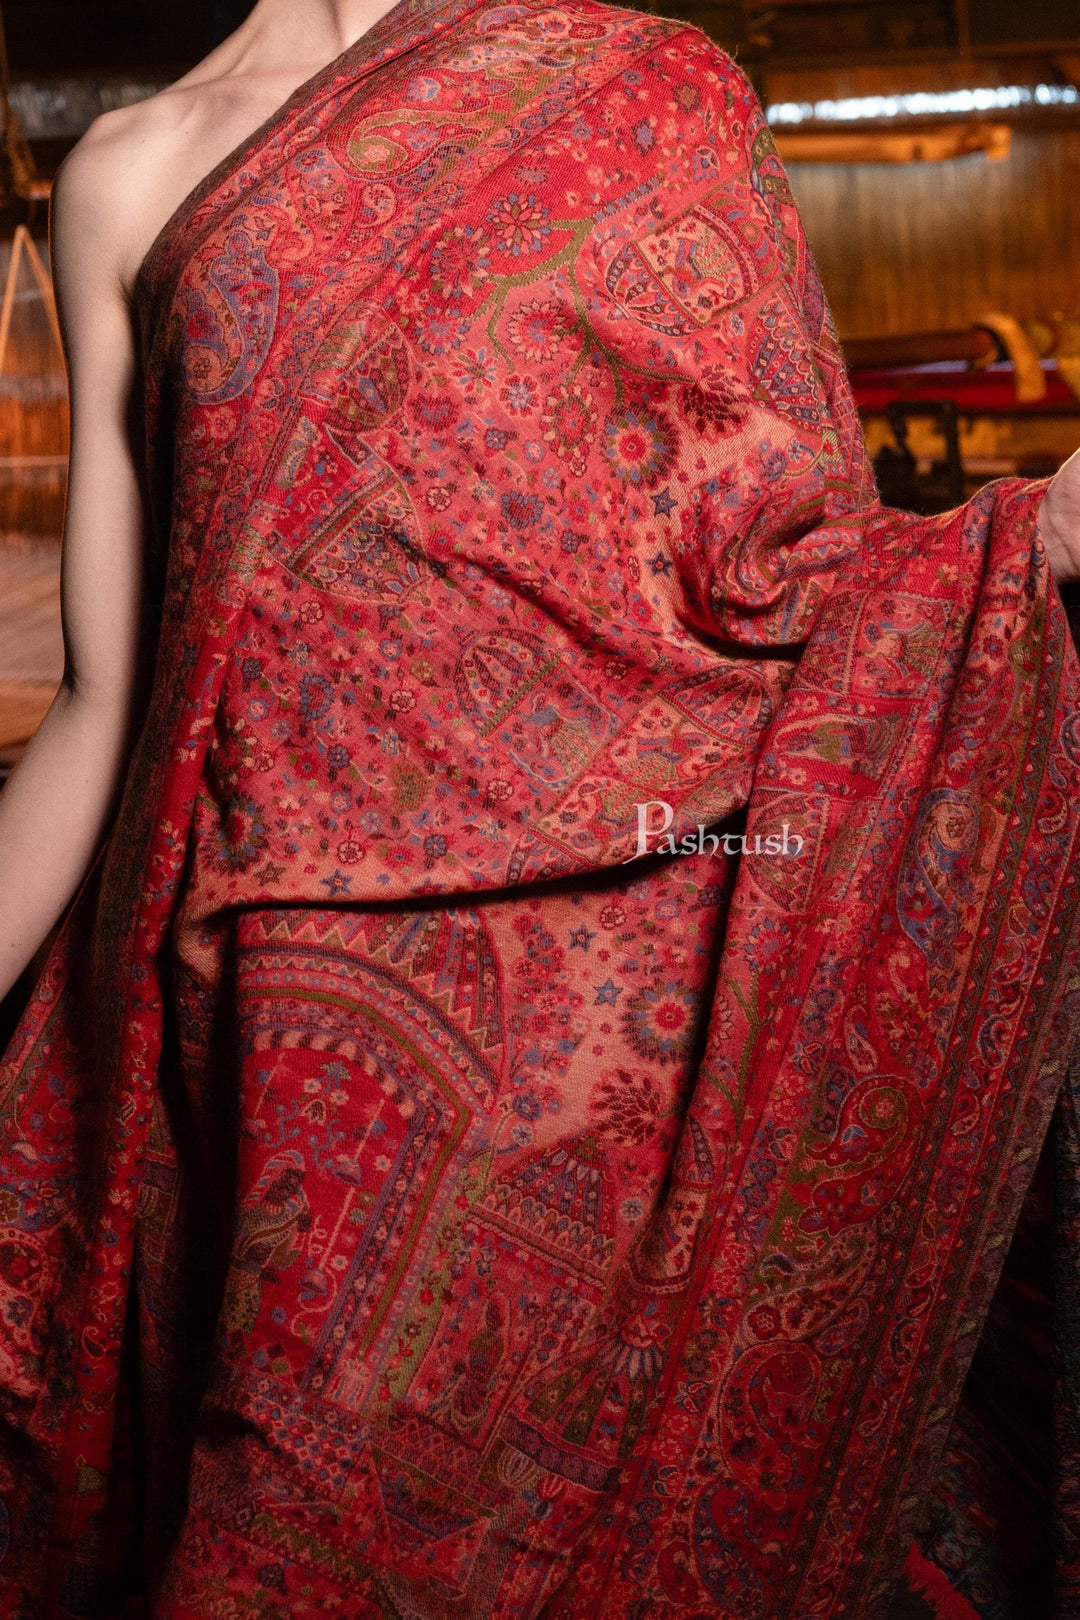 Pashtush women pure wool, woolmark certified shawl, ethnic weave